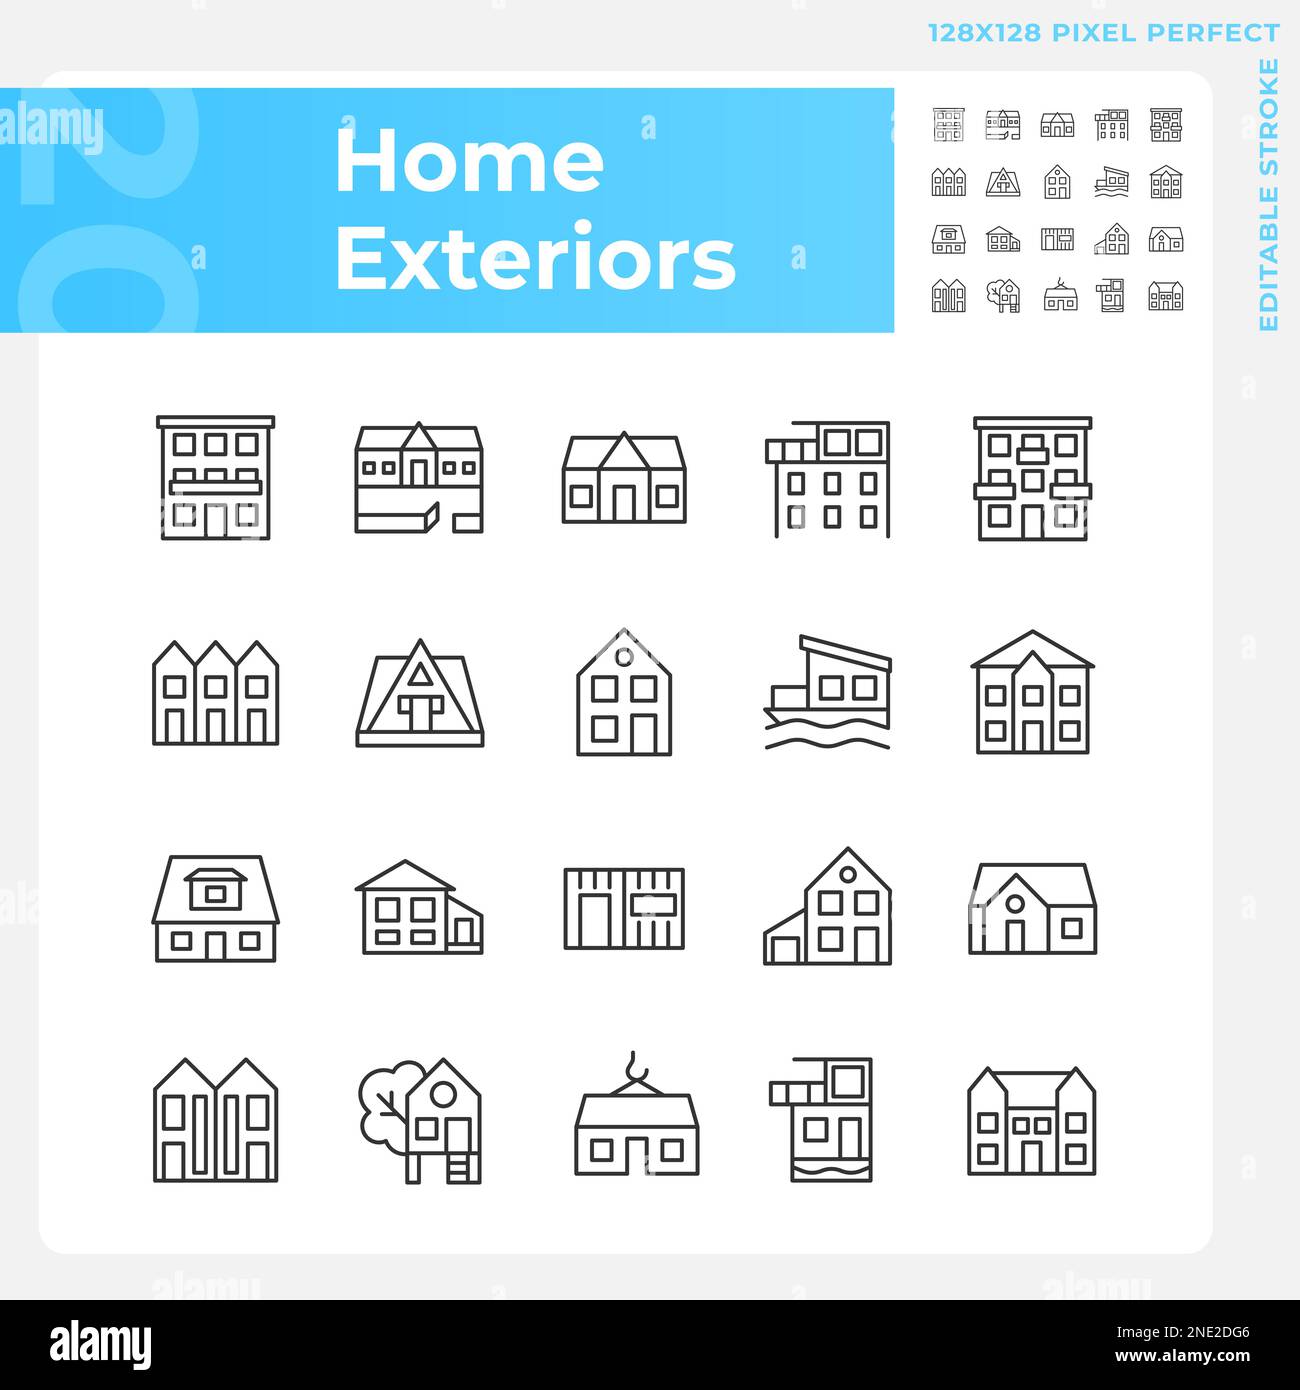 Home Exteriors Pixel Perfect Linear Symbolsatz Stock Vektor